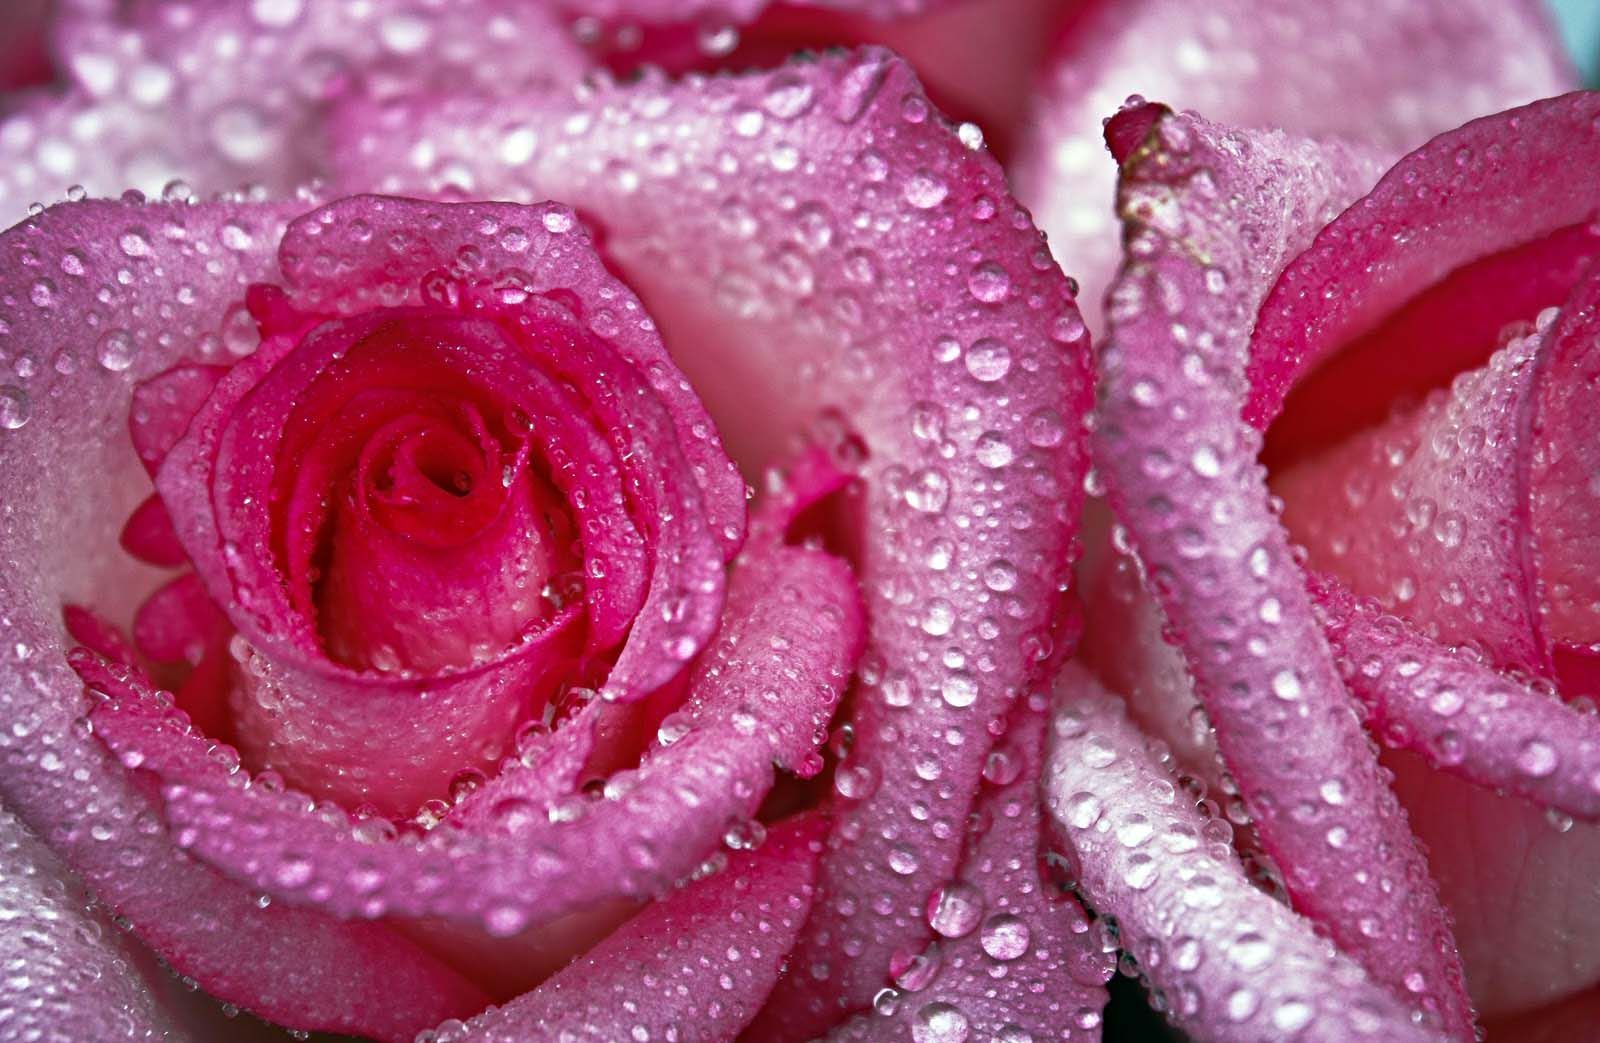 Water Drops Roses Astonishing Wallpaper HD. Rose wallpaper, Pink rose wallpaper hd, Rose flower wallpaper